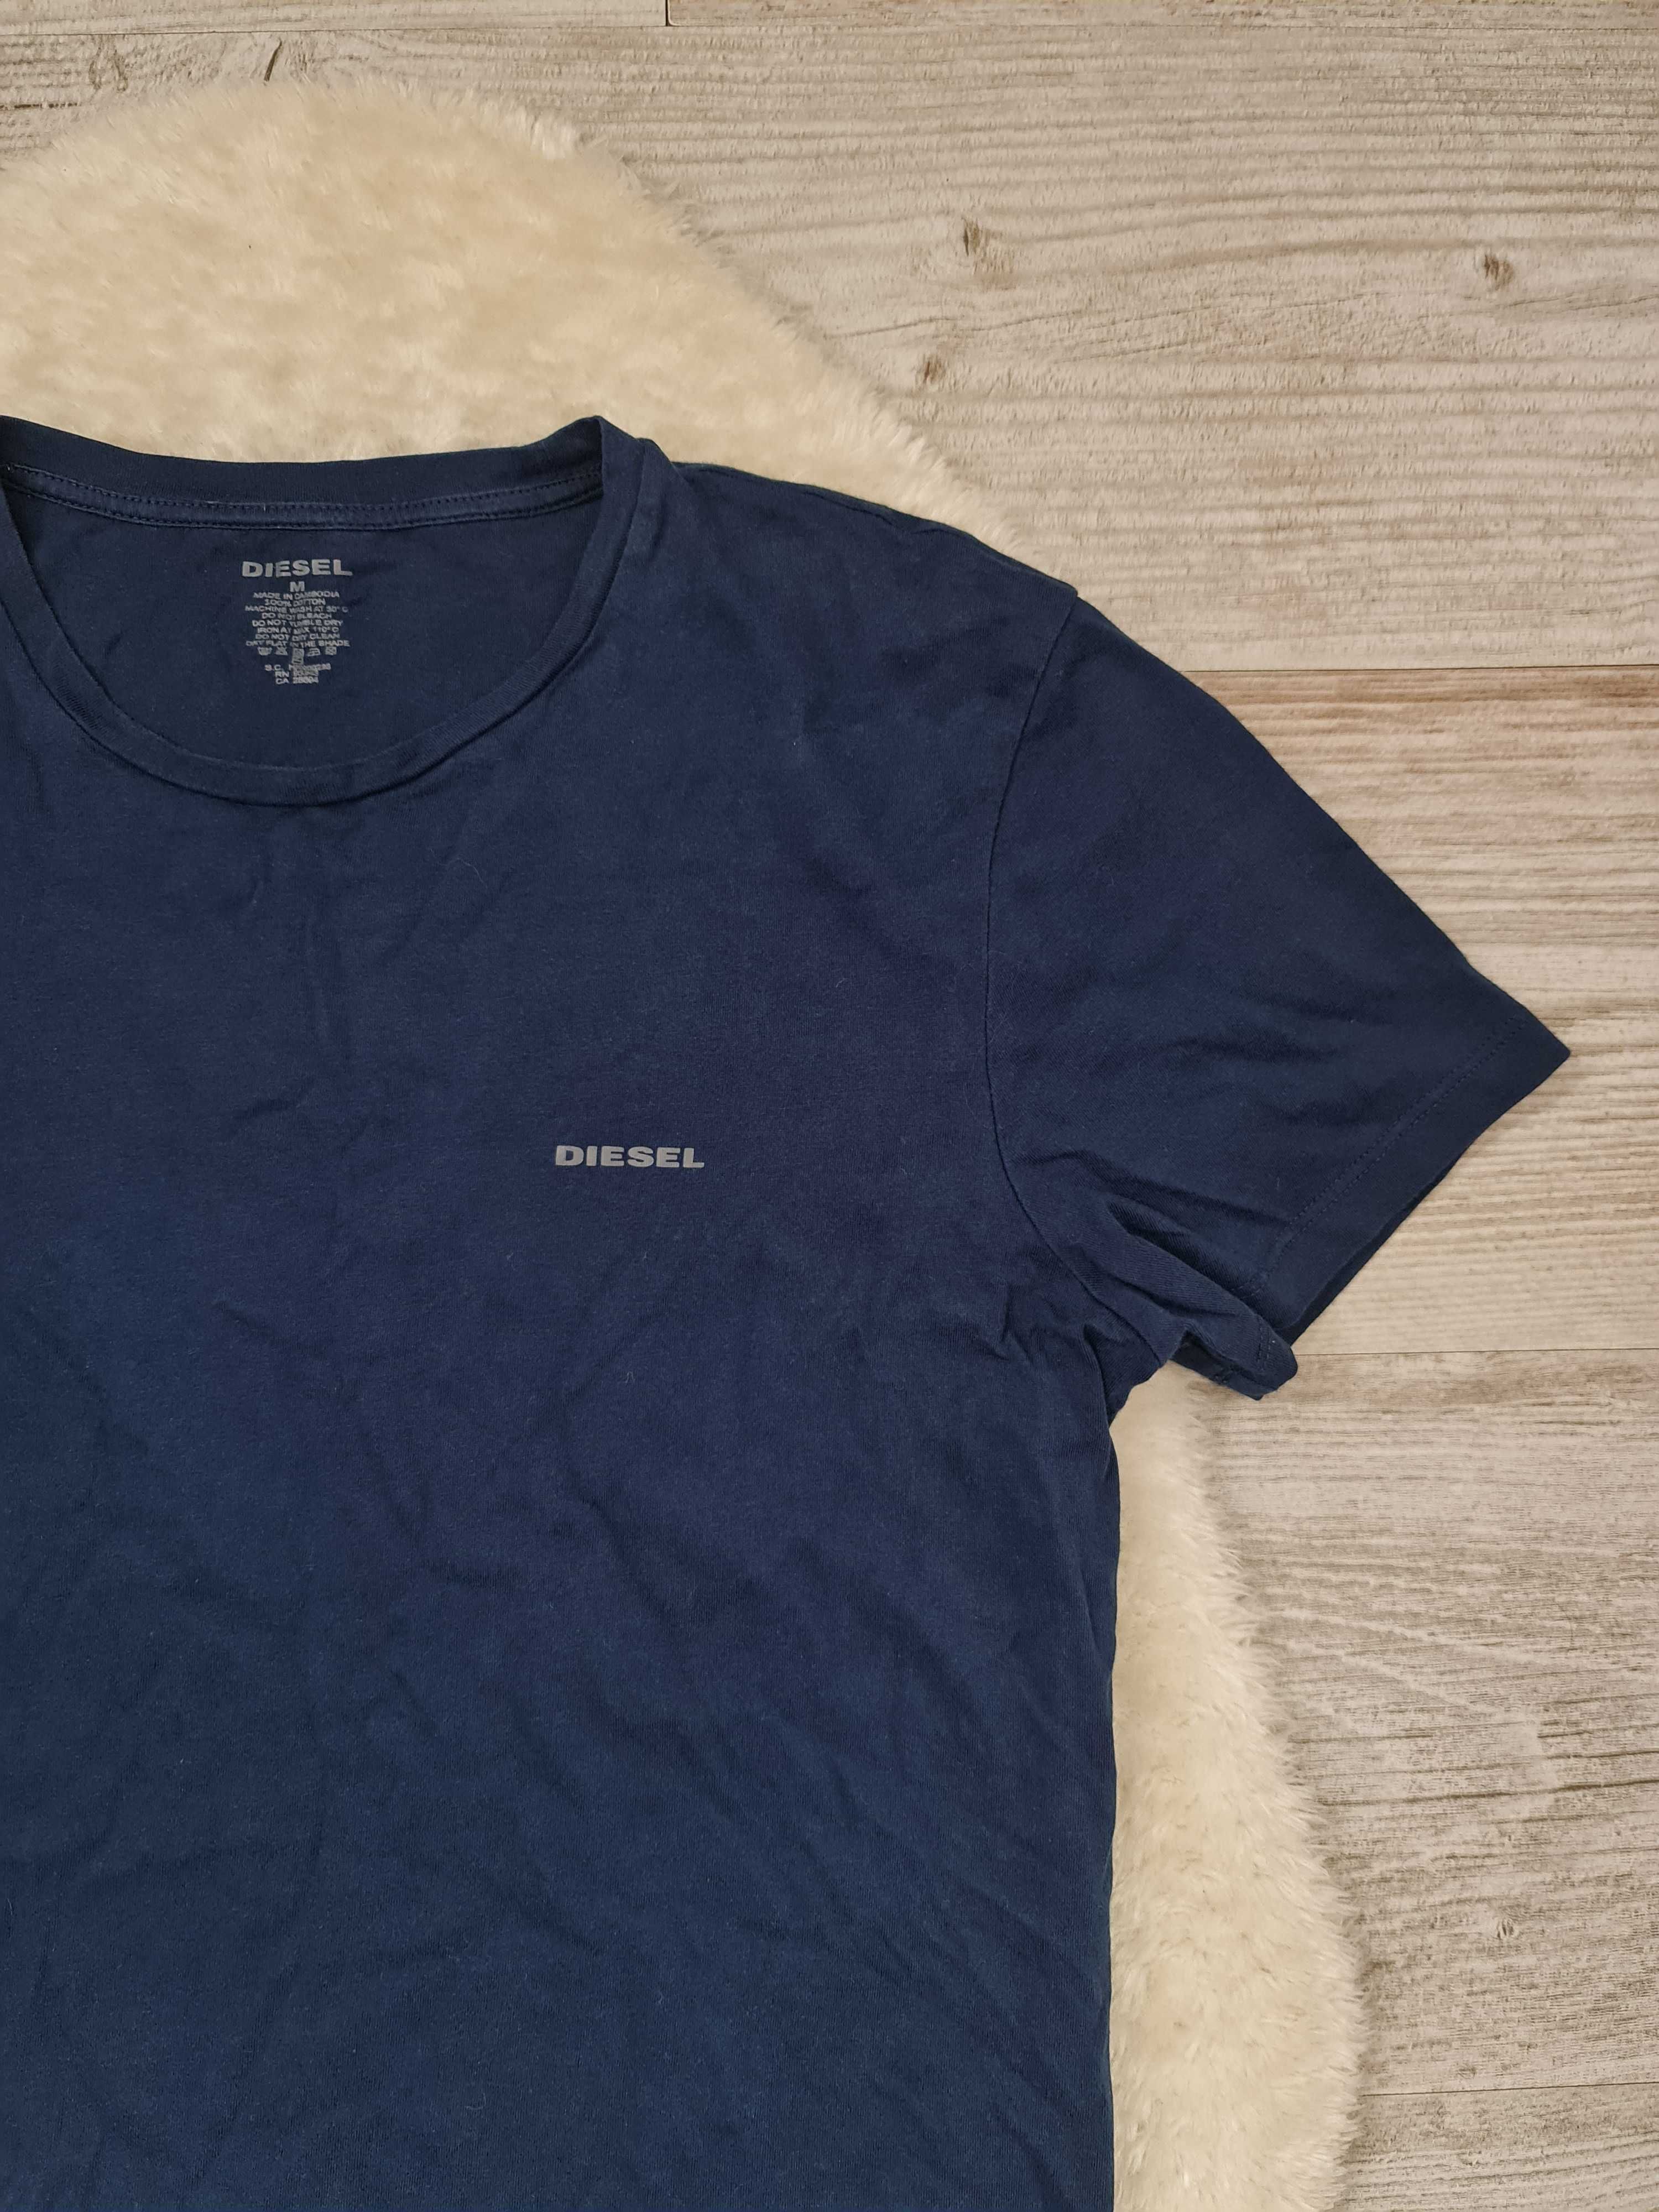 Koszulka T-shirt Diesel Rozmiar M granatowa Oryginalna Logo